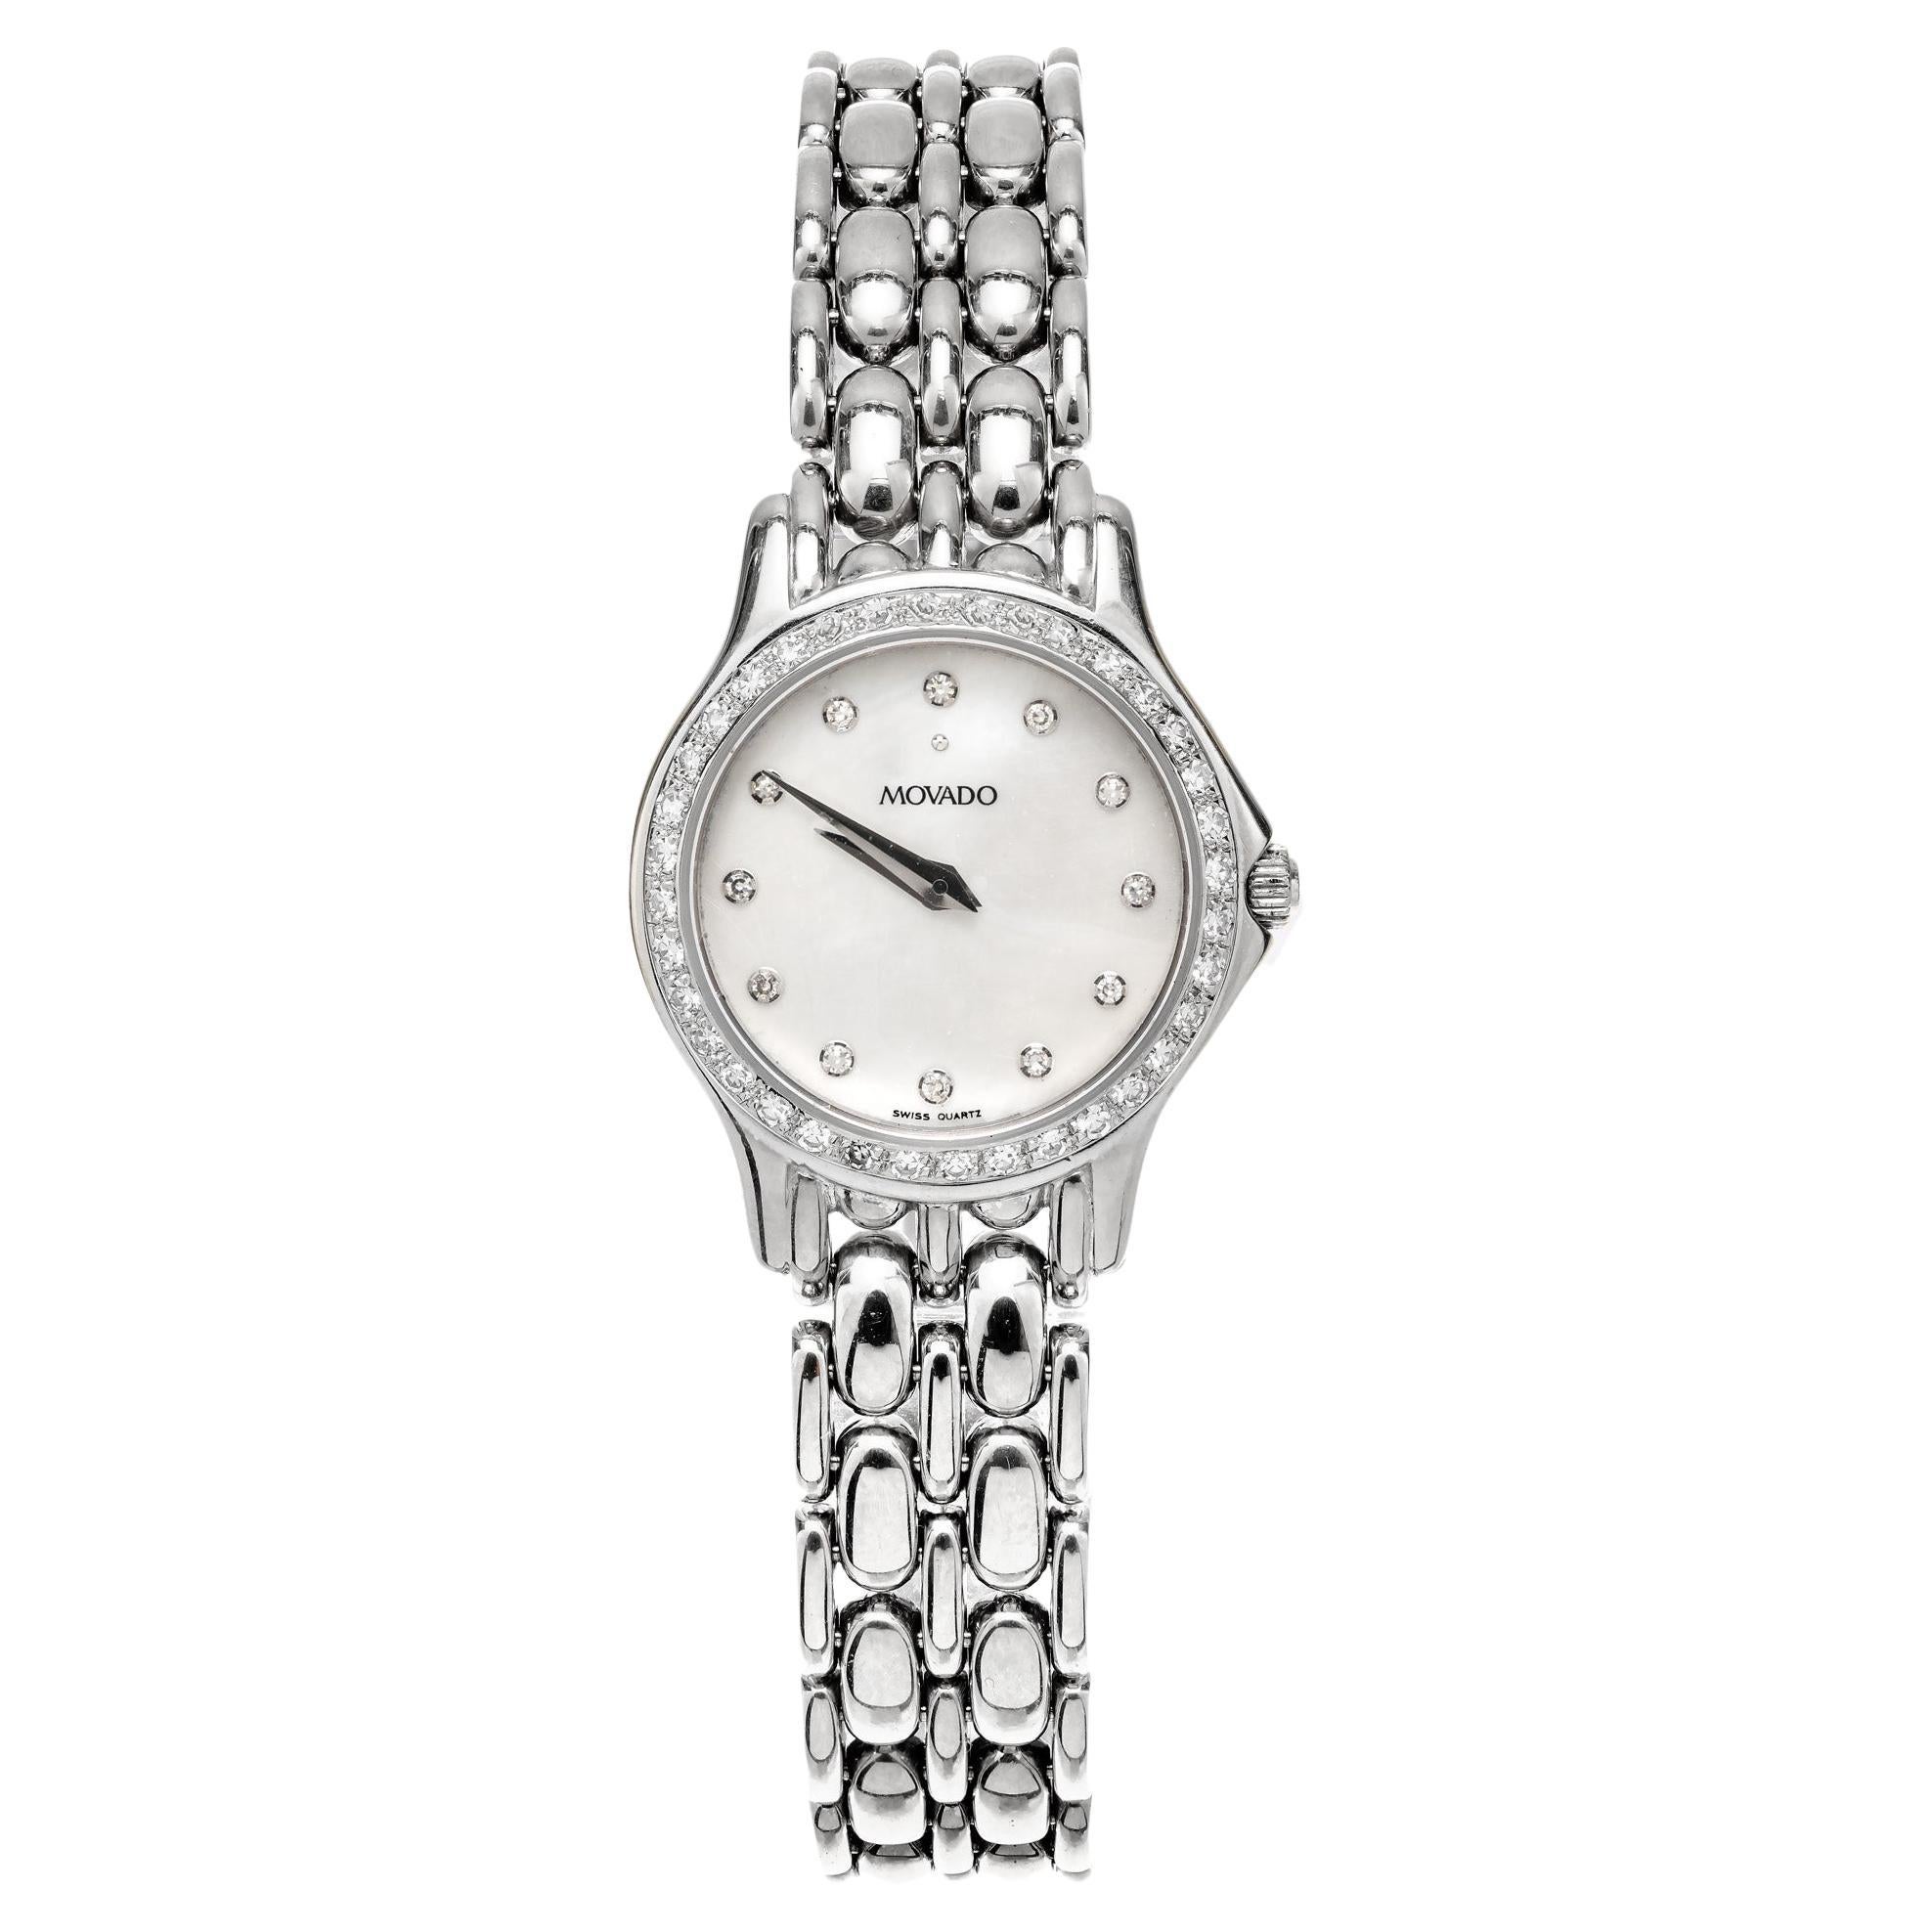 Movado Lady's Diamond Bezel White Gold Wristwatch For Sale